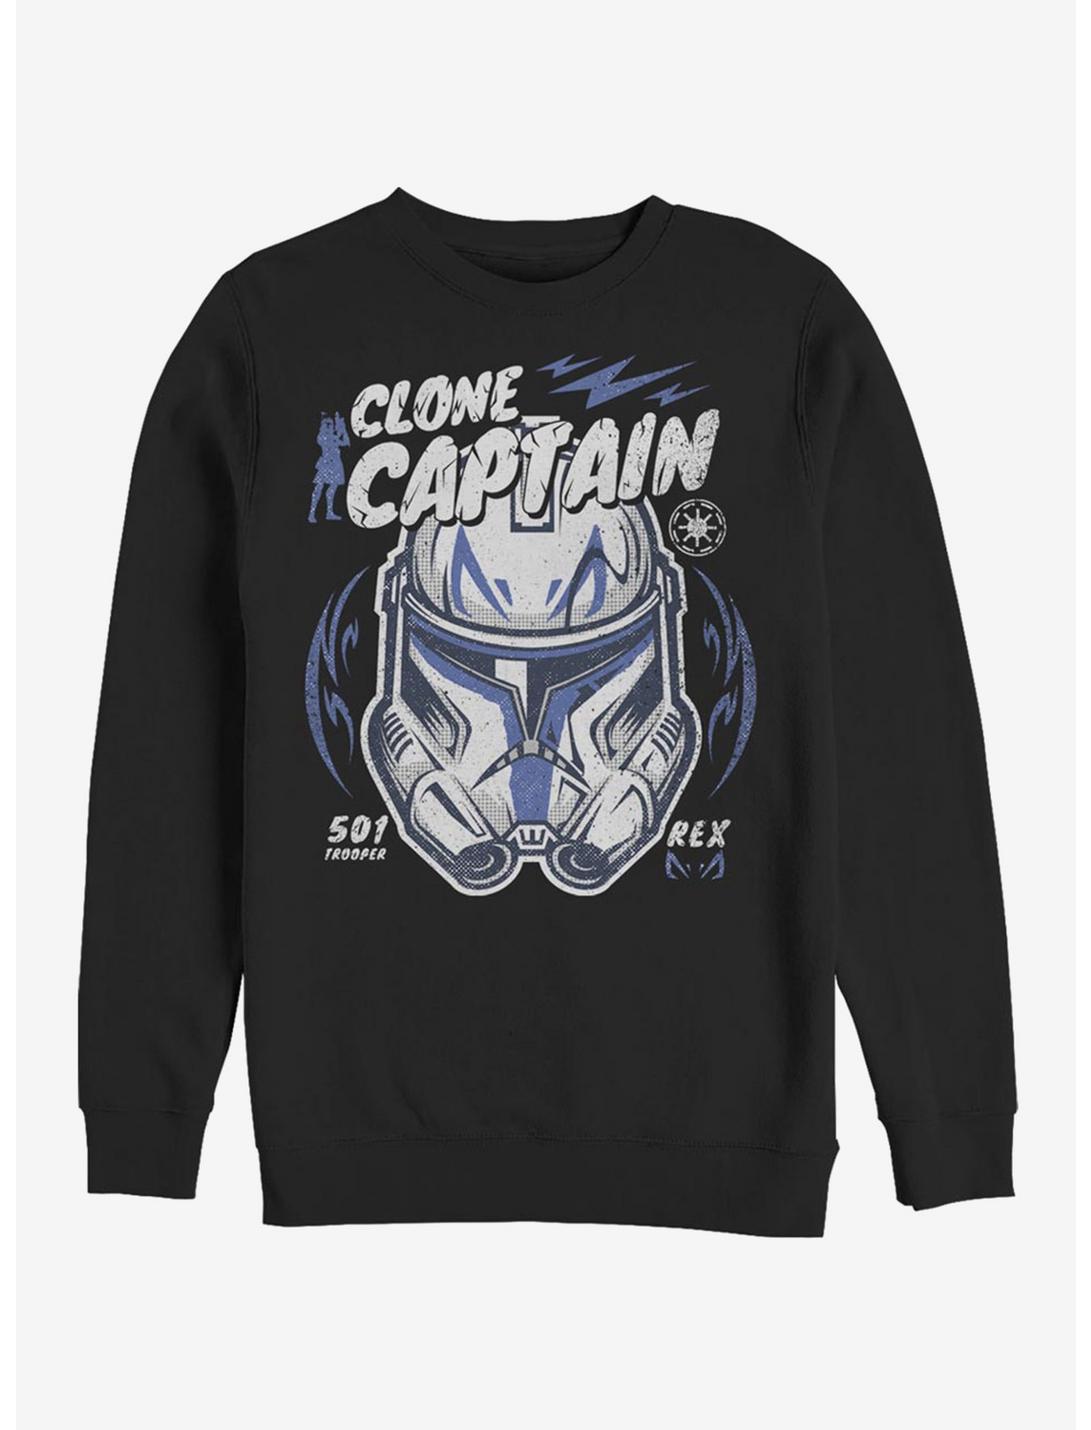 Plus Size Star Wars: The Clone Wars Captain Rex Sweatshirt, BLACK, hi-res